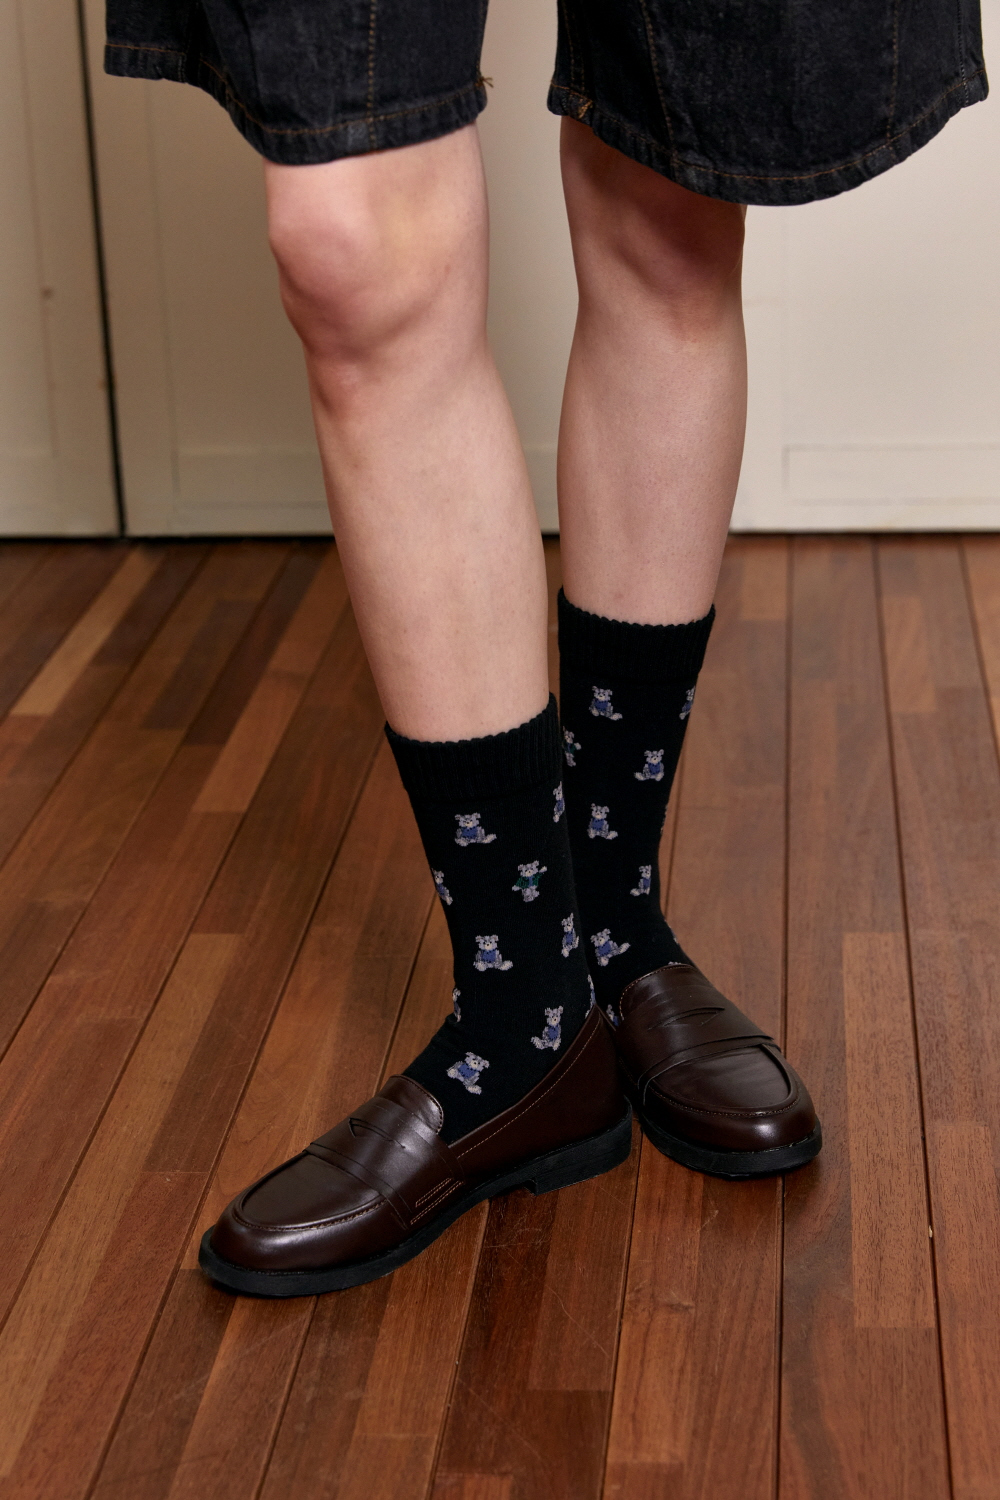 socks product image-S1L49